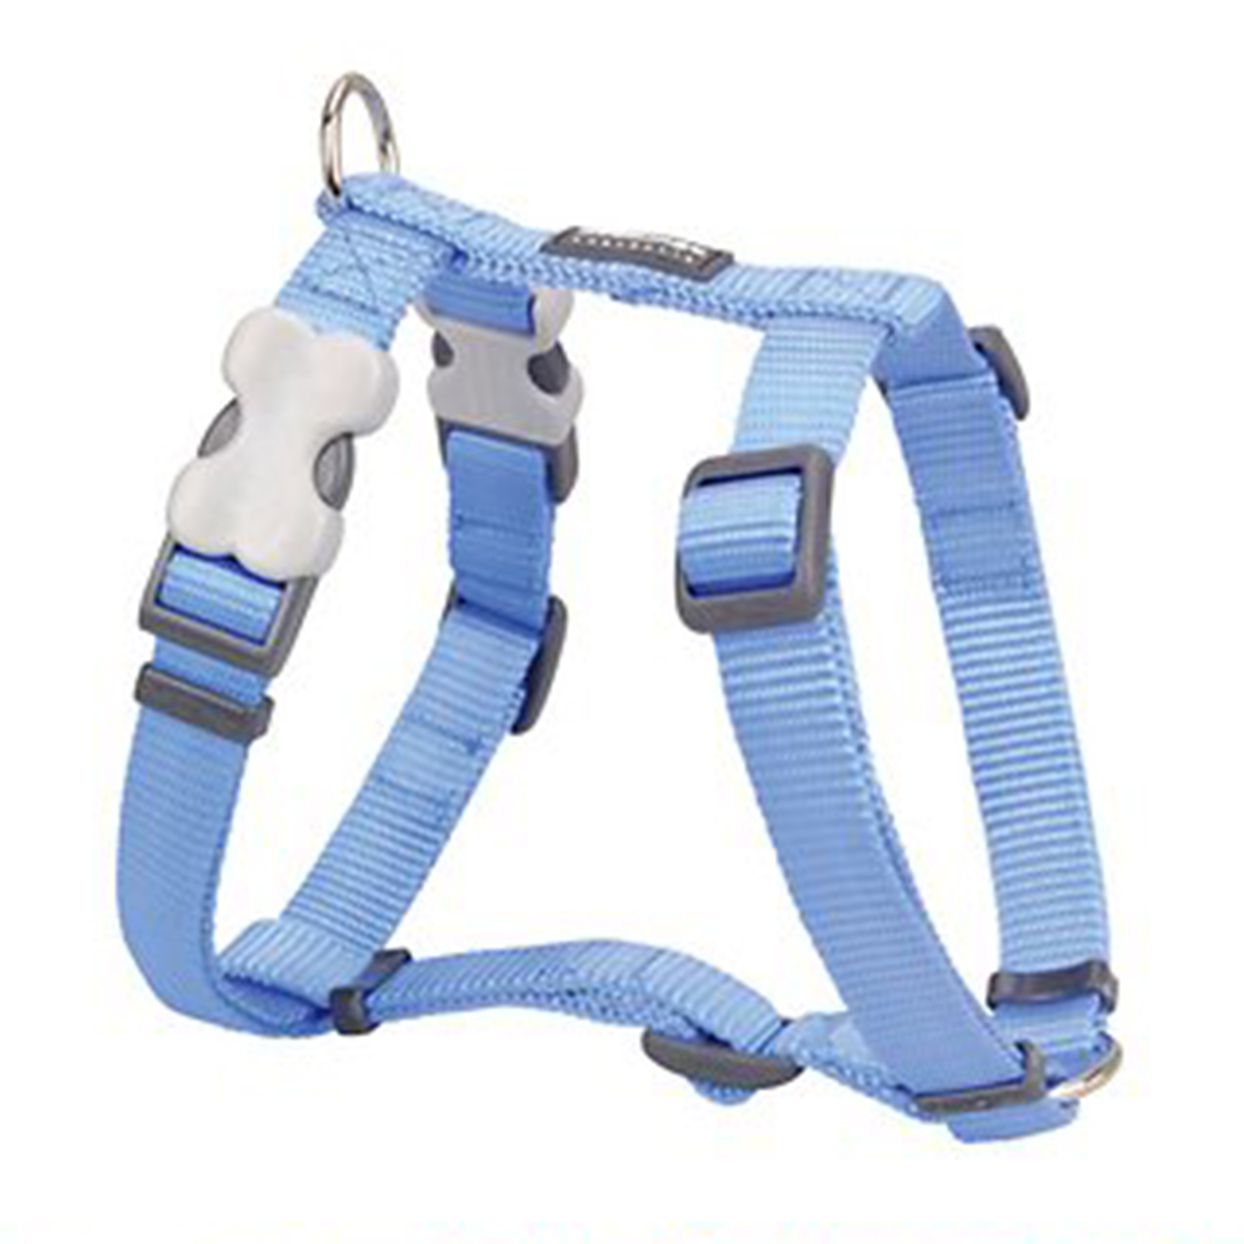 Red Dingo Classic Nylon Back Clip Dog Harness